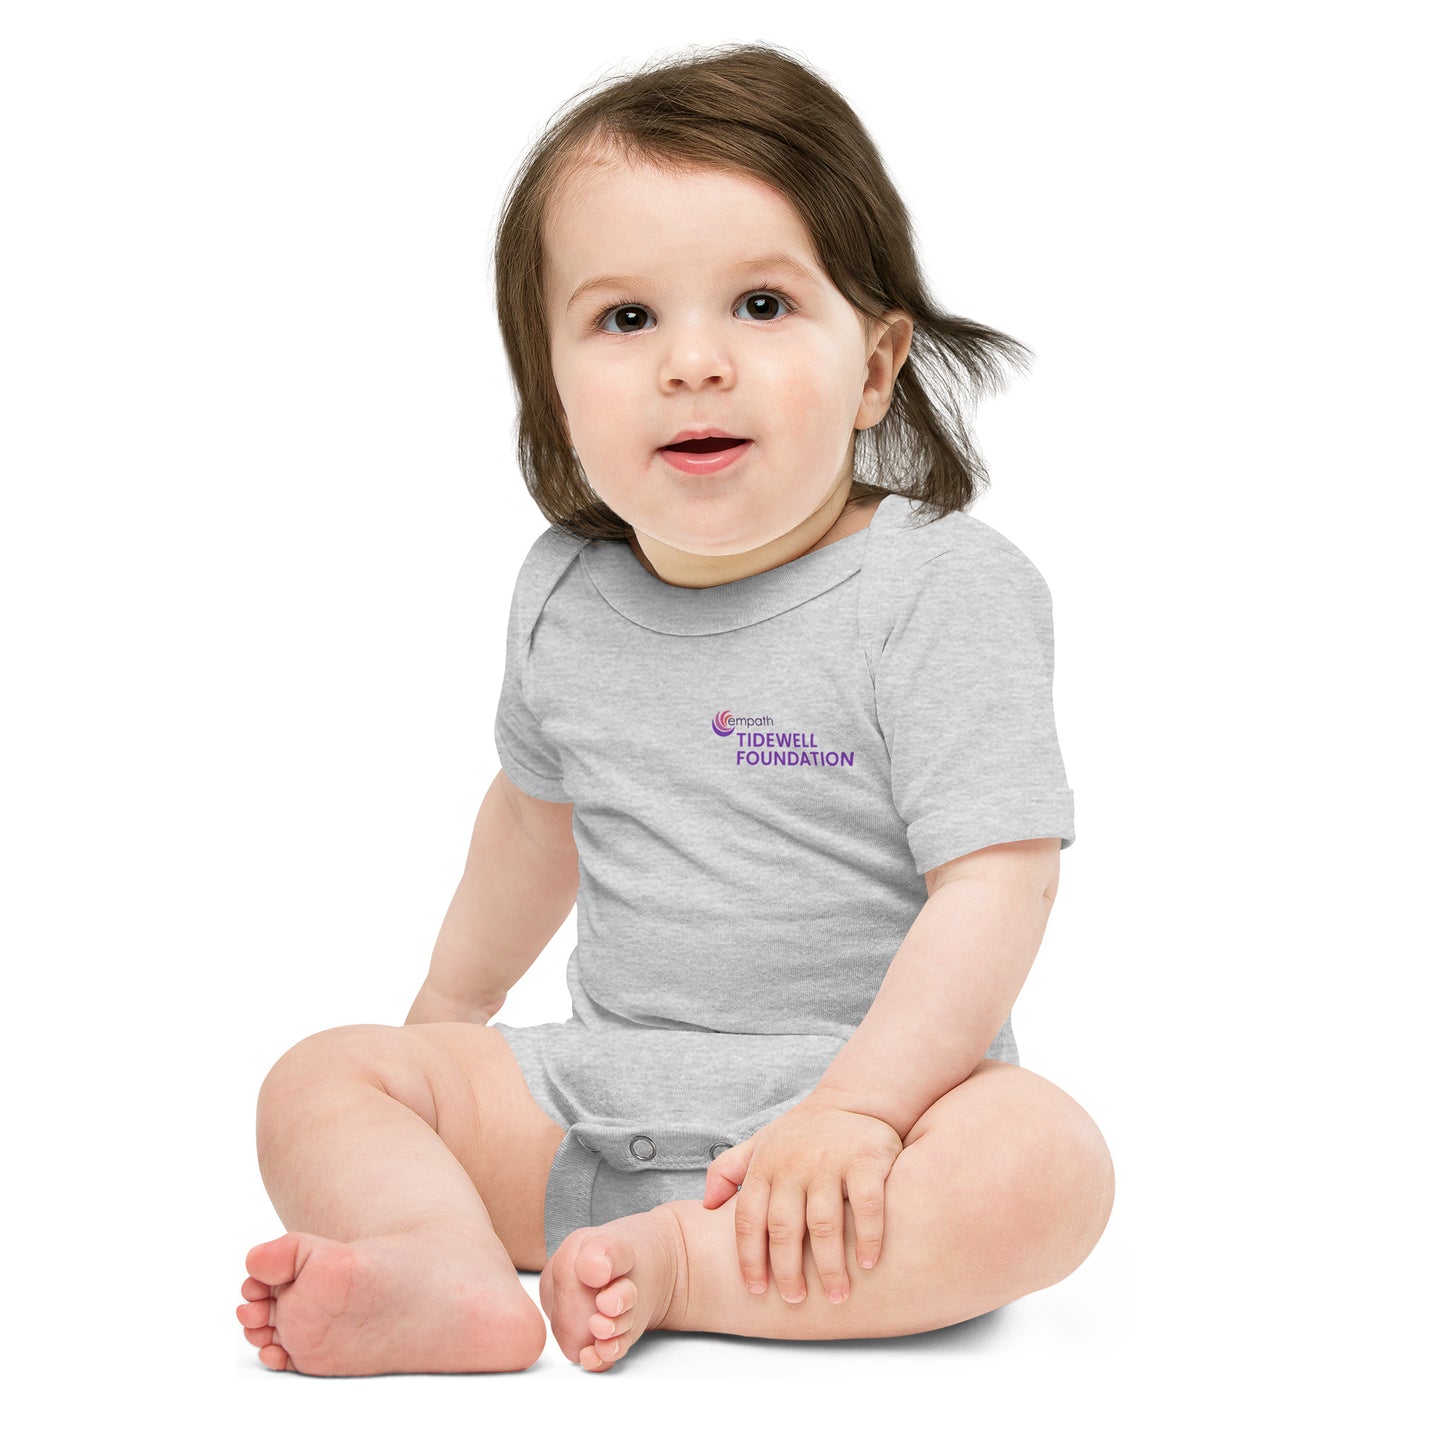 Infant Bodysuit - Tidewell Foundation